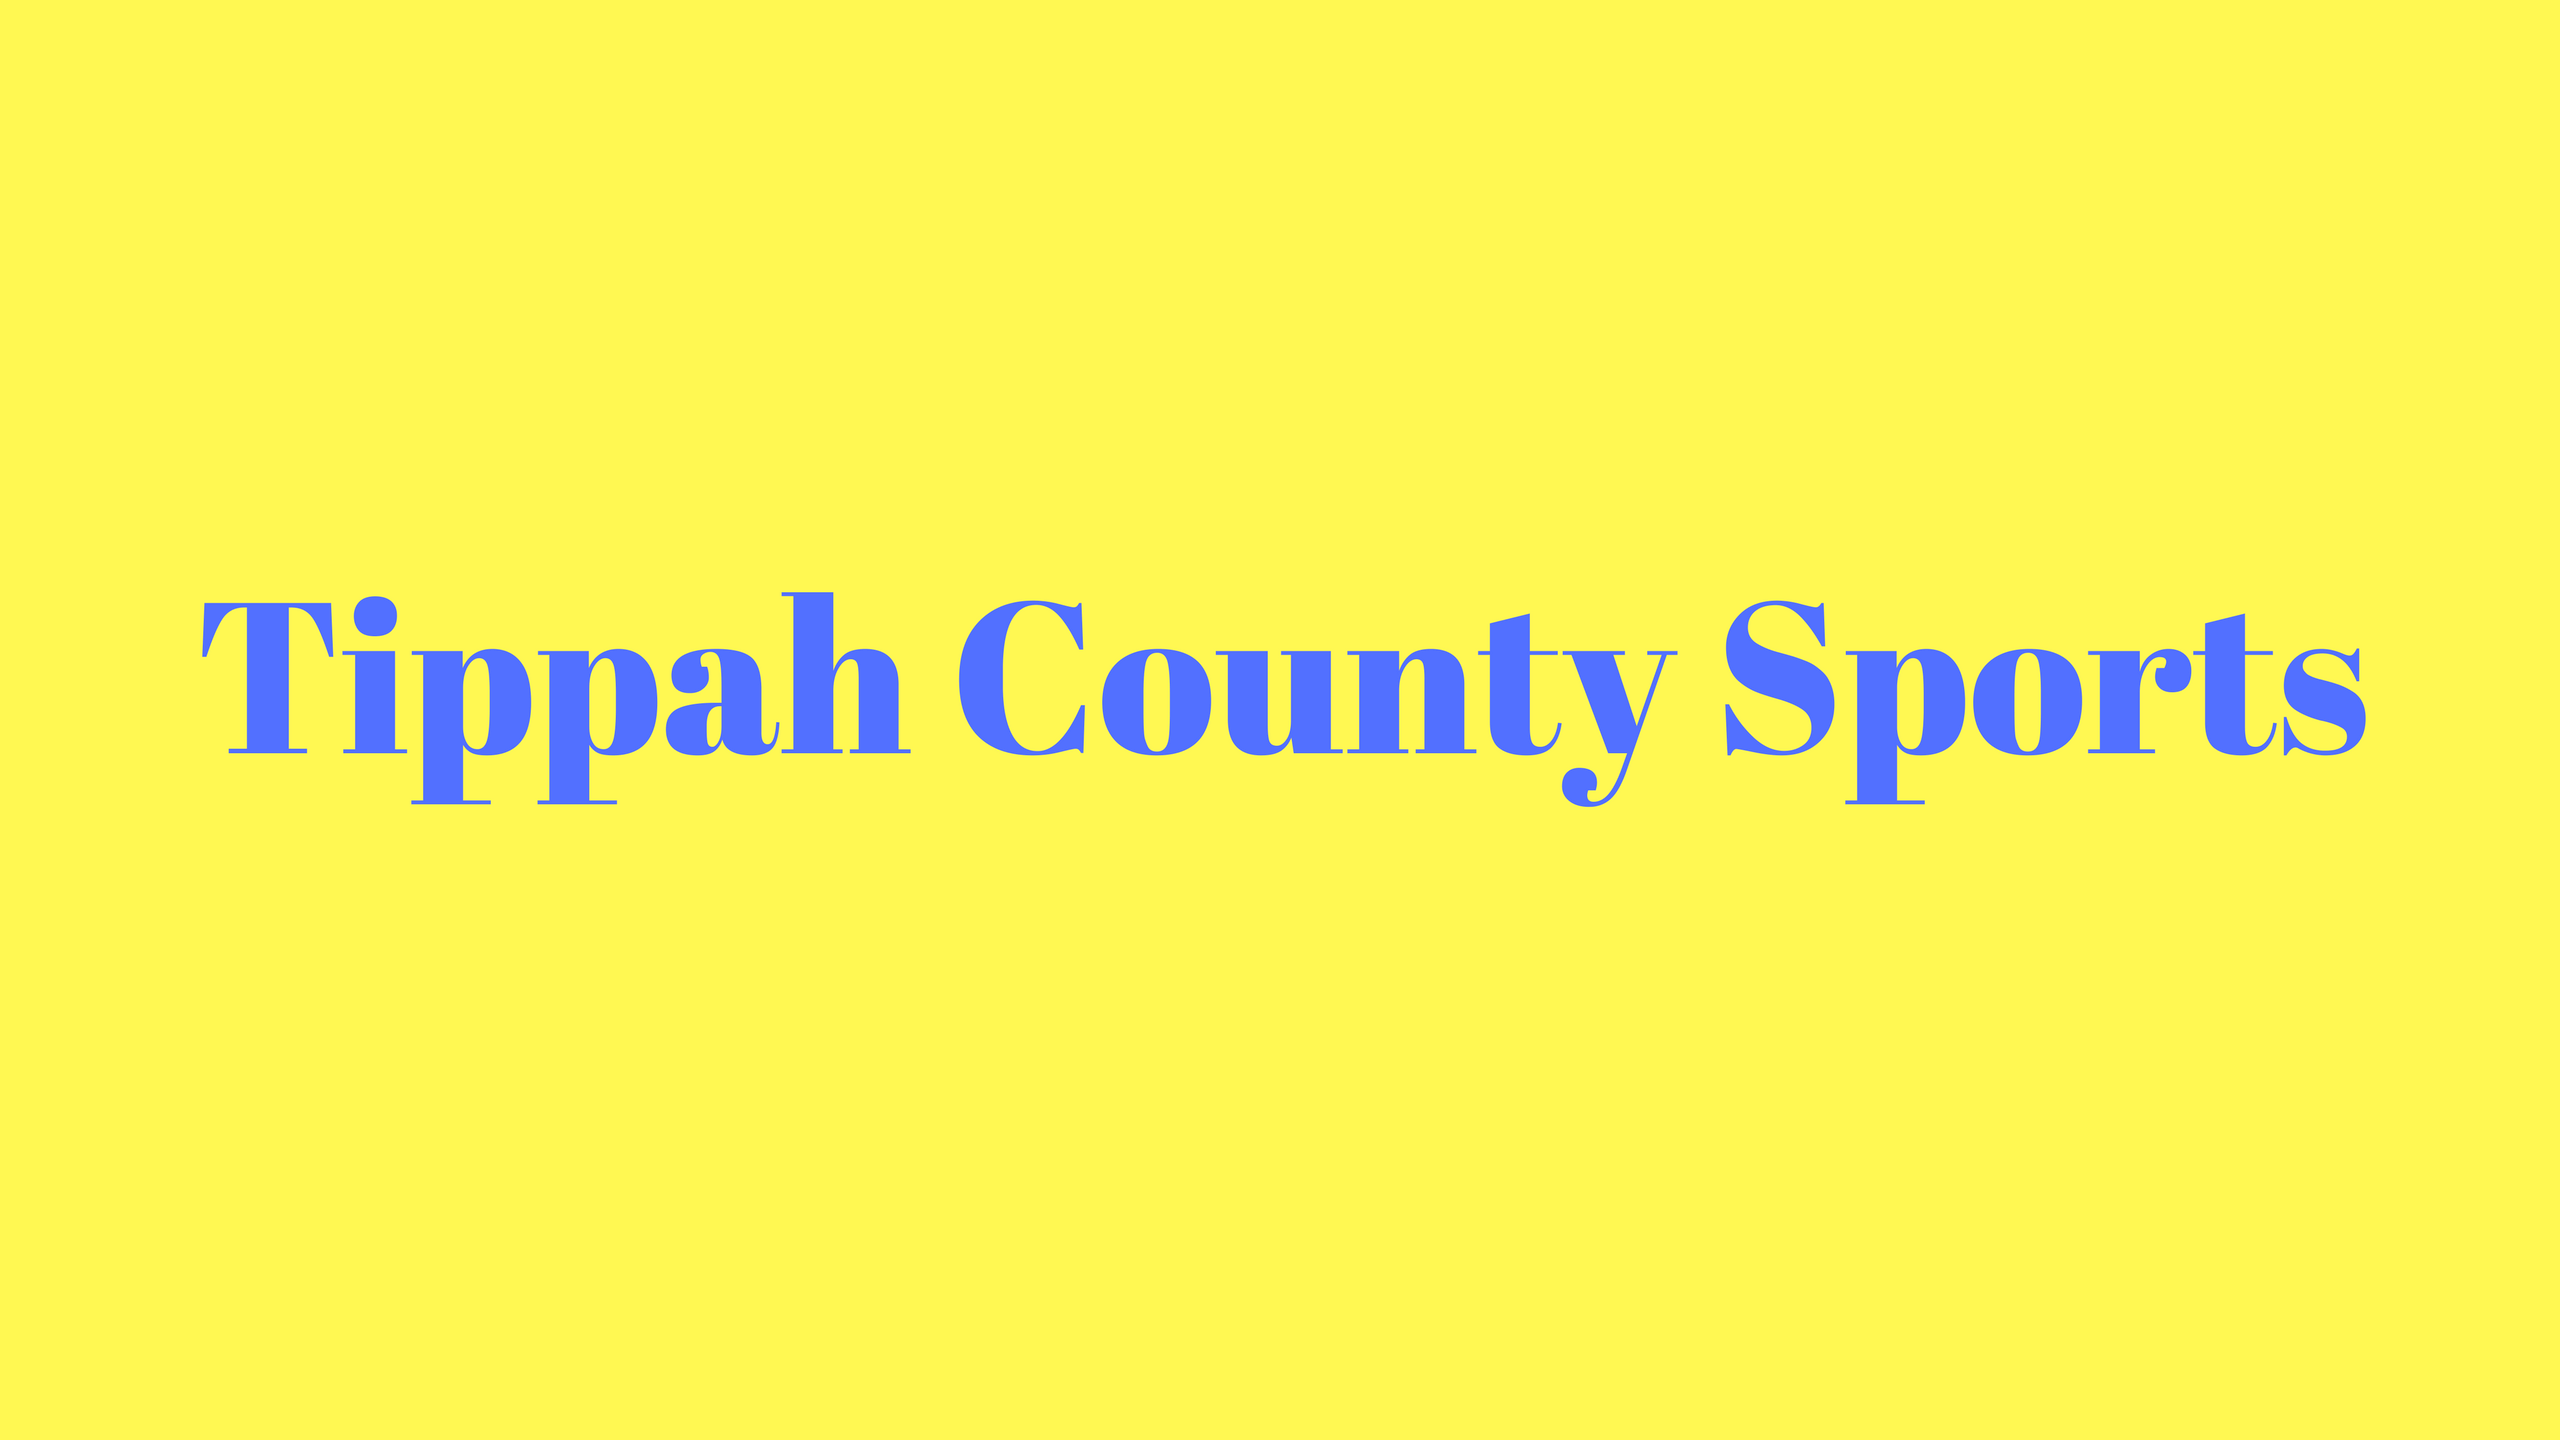 Tippah County Sports (1)